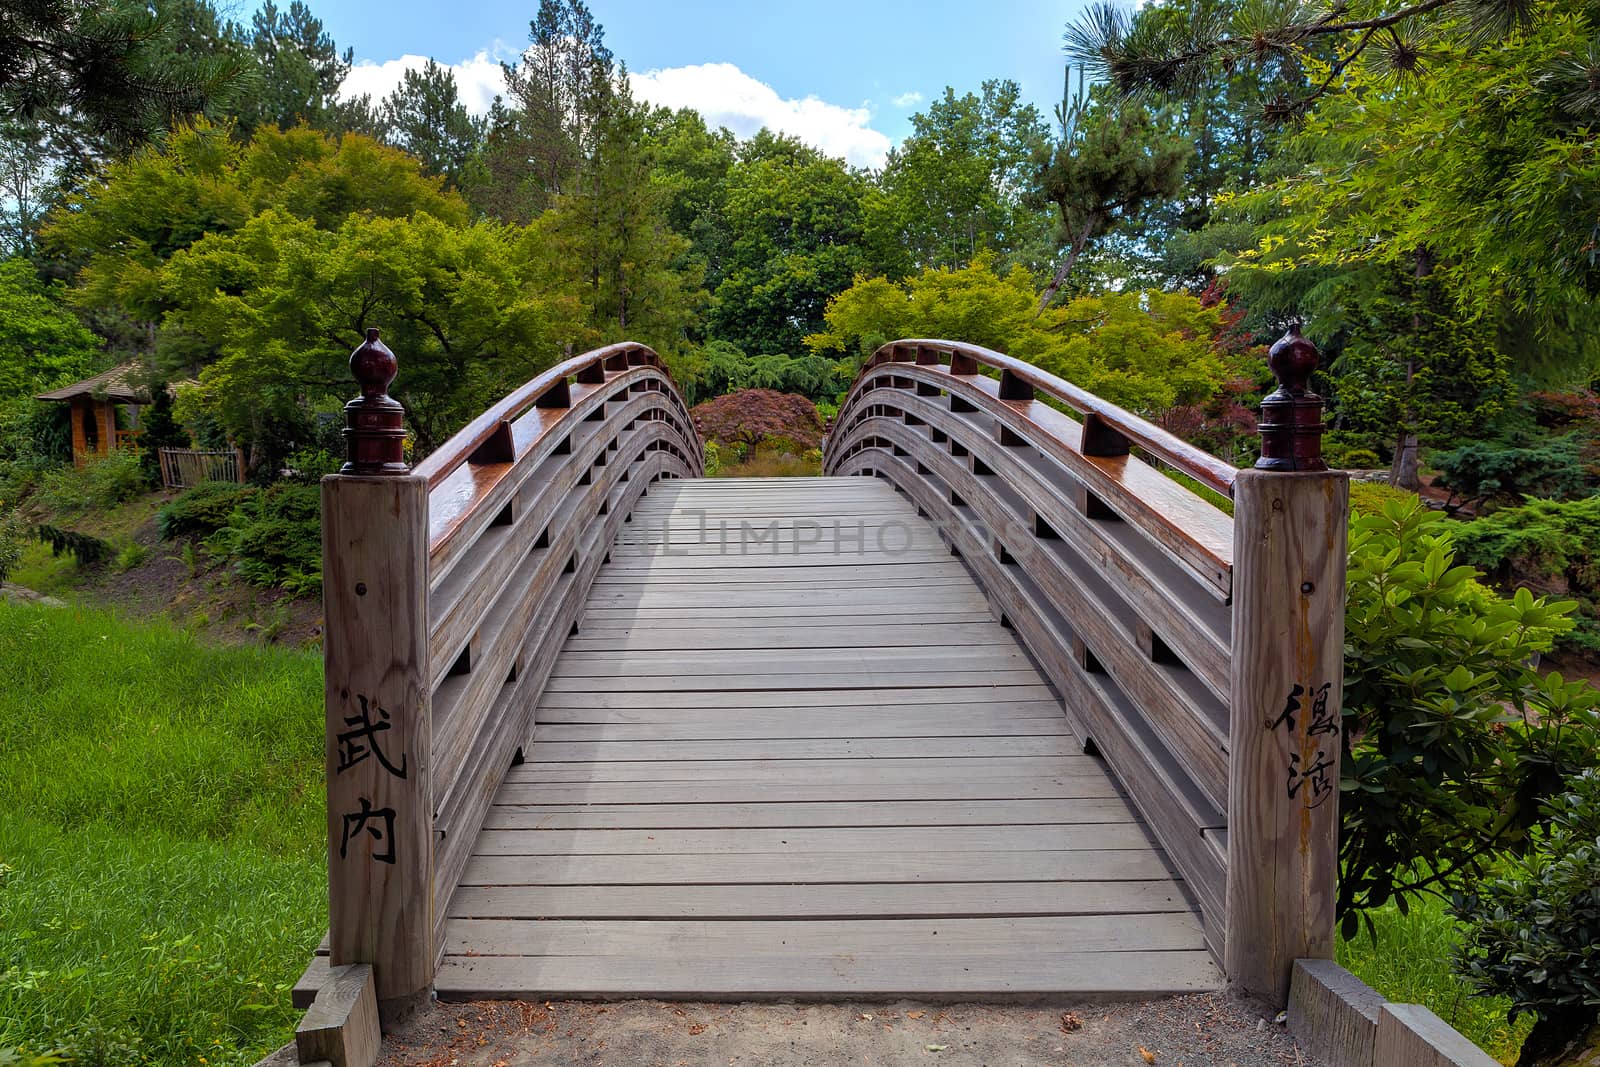 Wooden Foot Bridge to Tsuru Island Japanese Garden by Davidgn